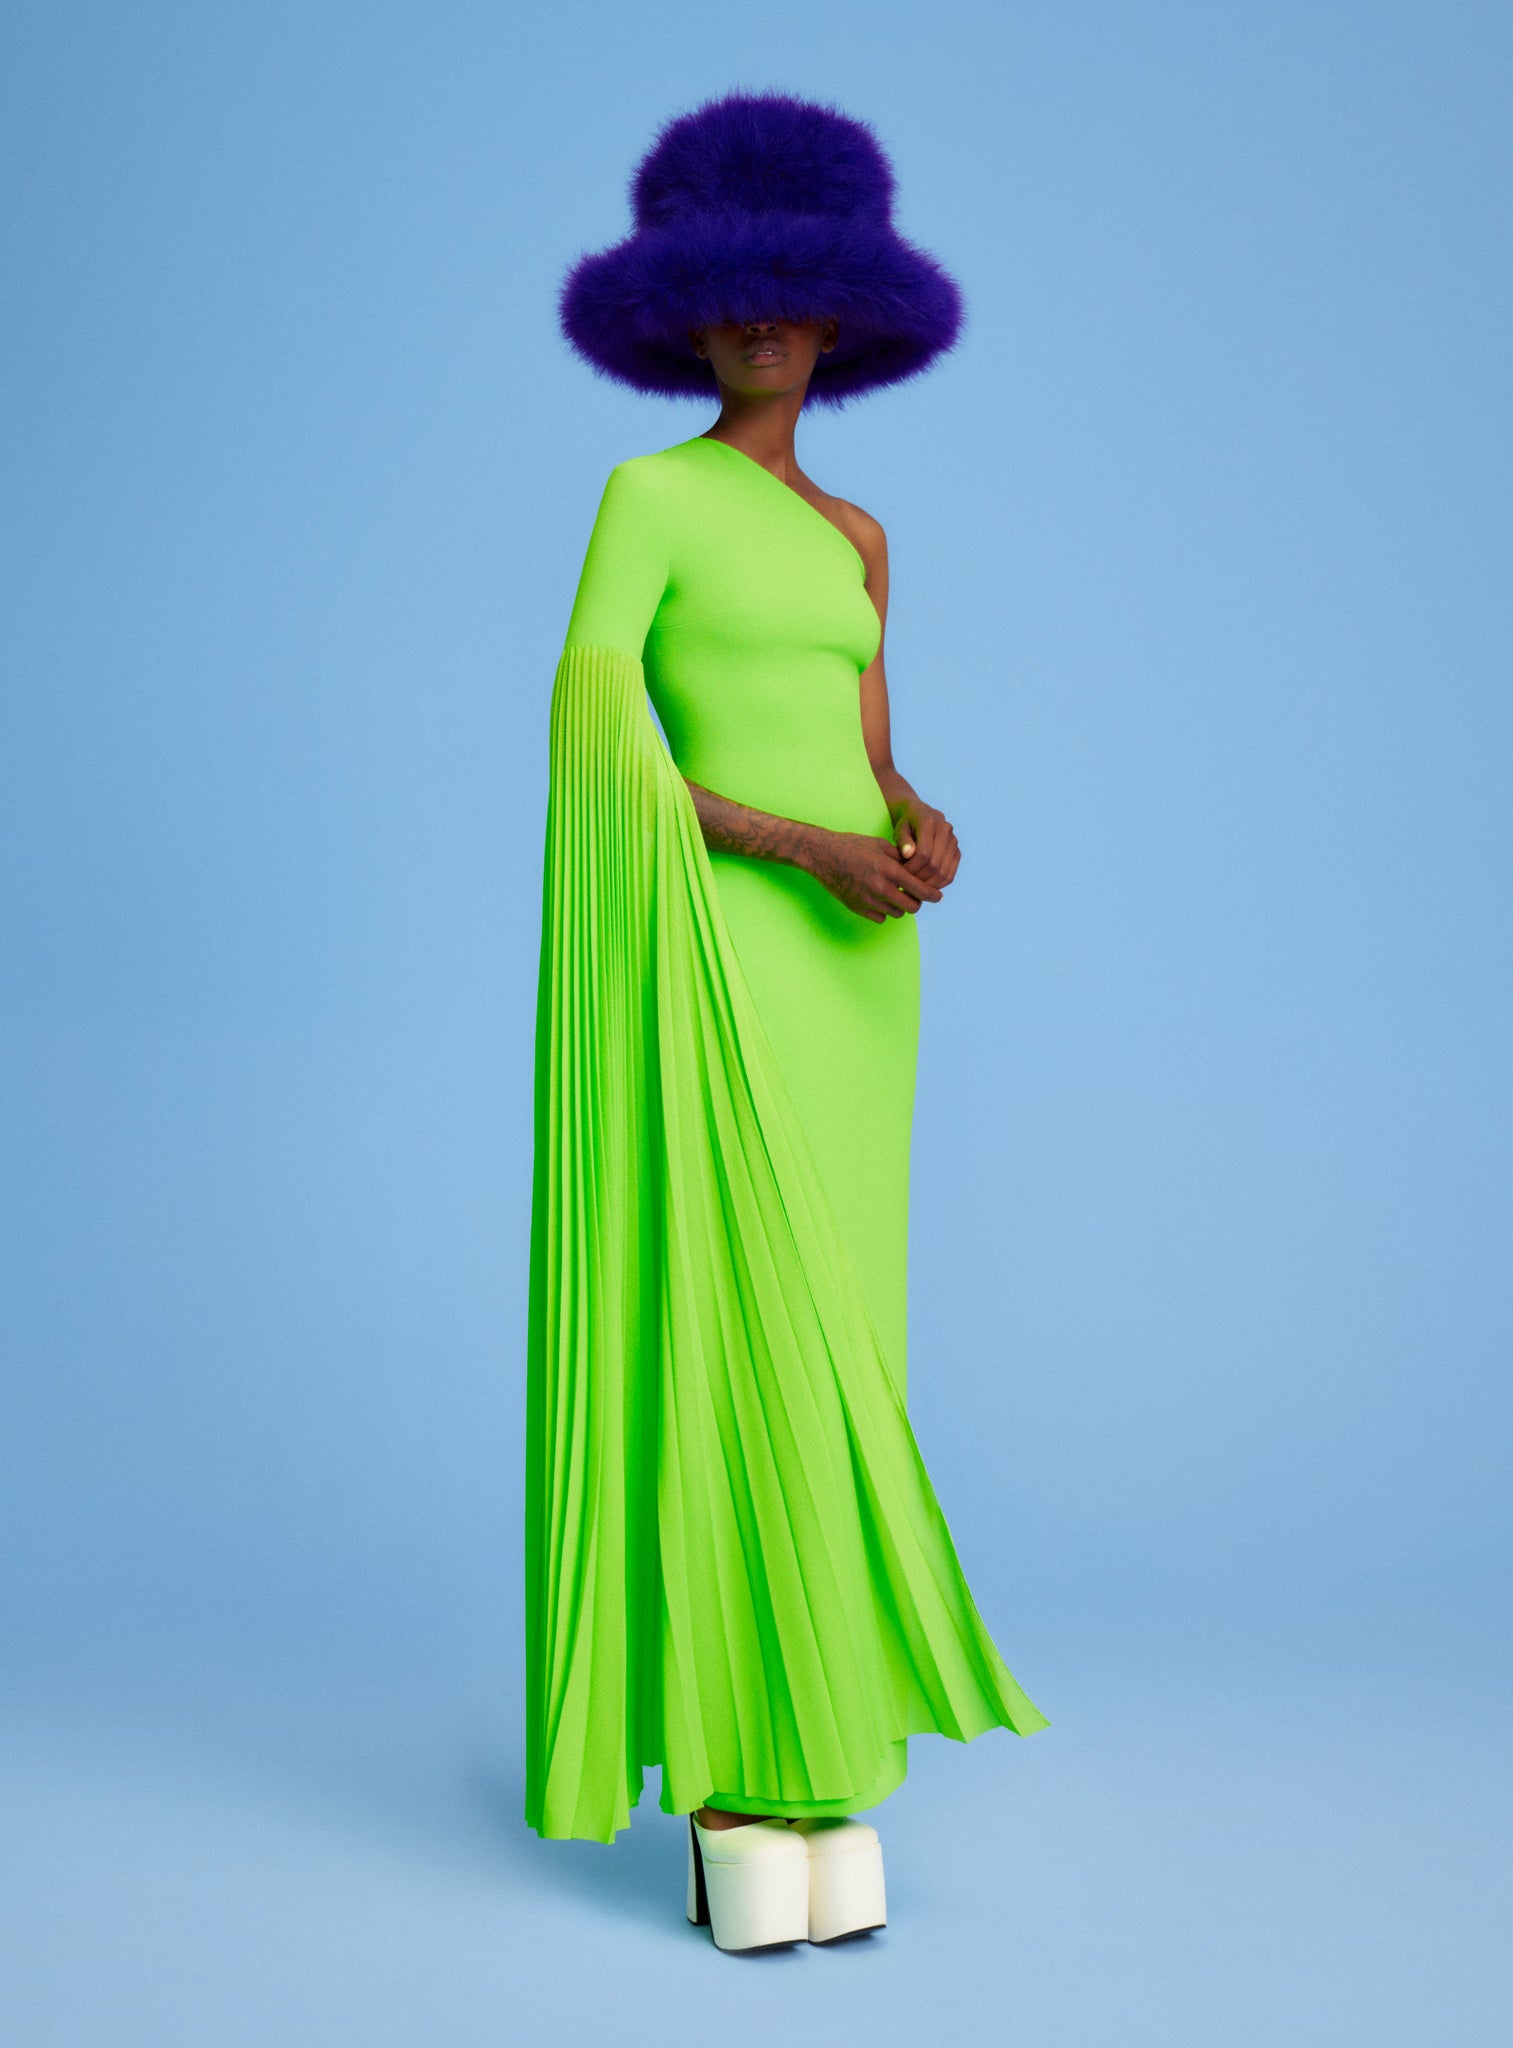 The Delia Maxi Dress in Lime